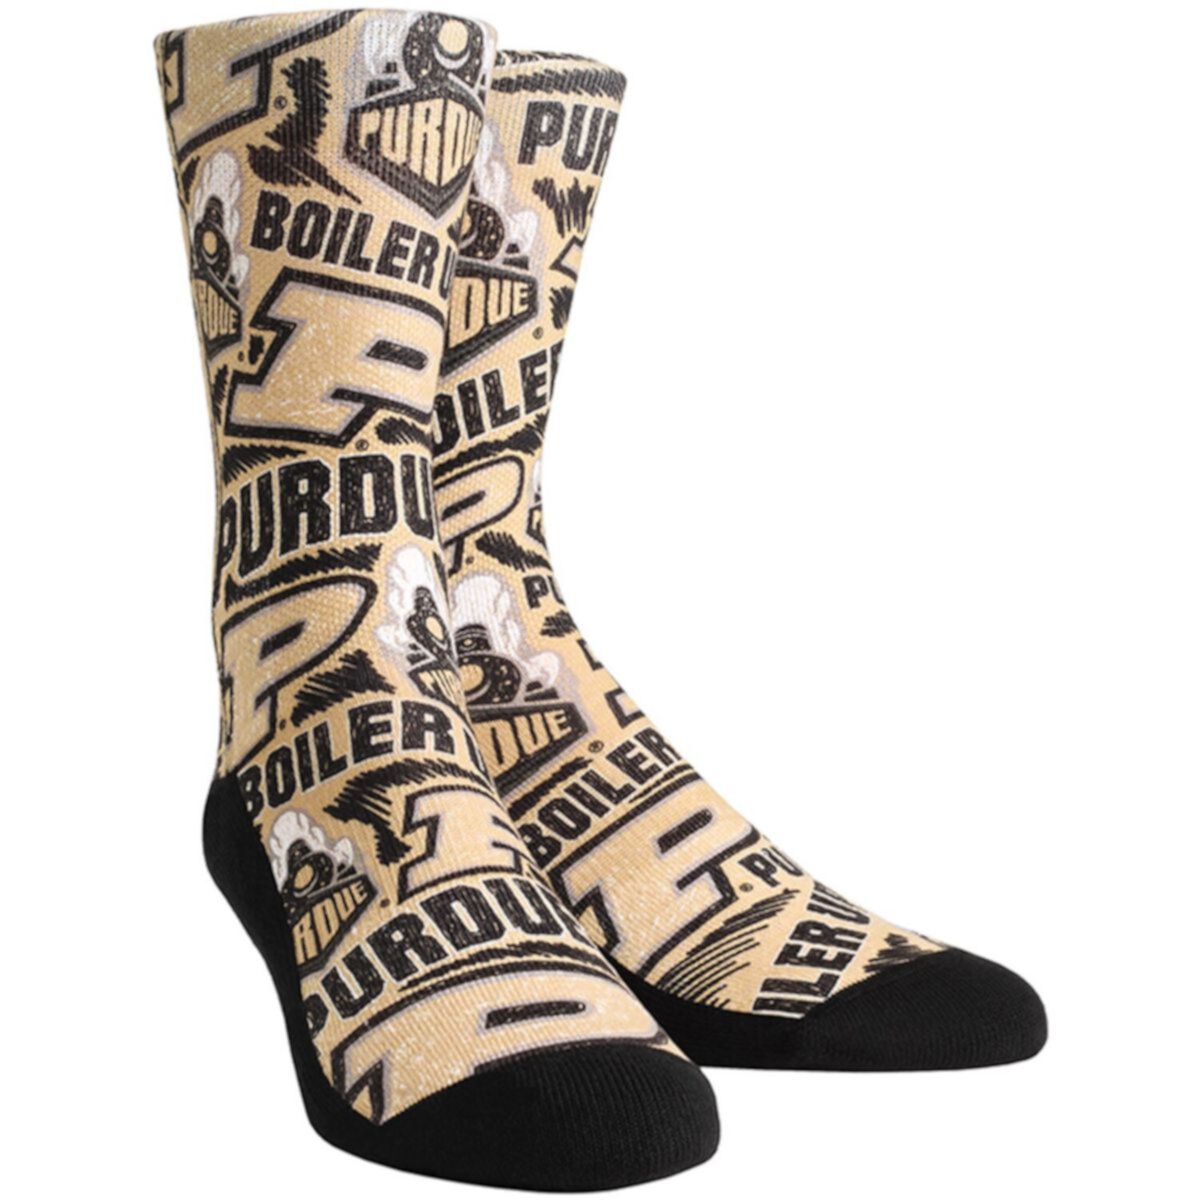 Женские носки с круглым вырезом и логотипом Purdue Boilermakers Gold Unbranded